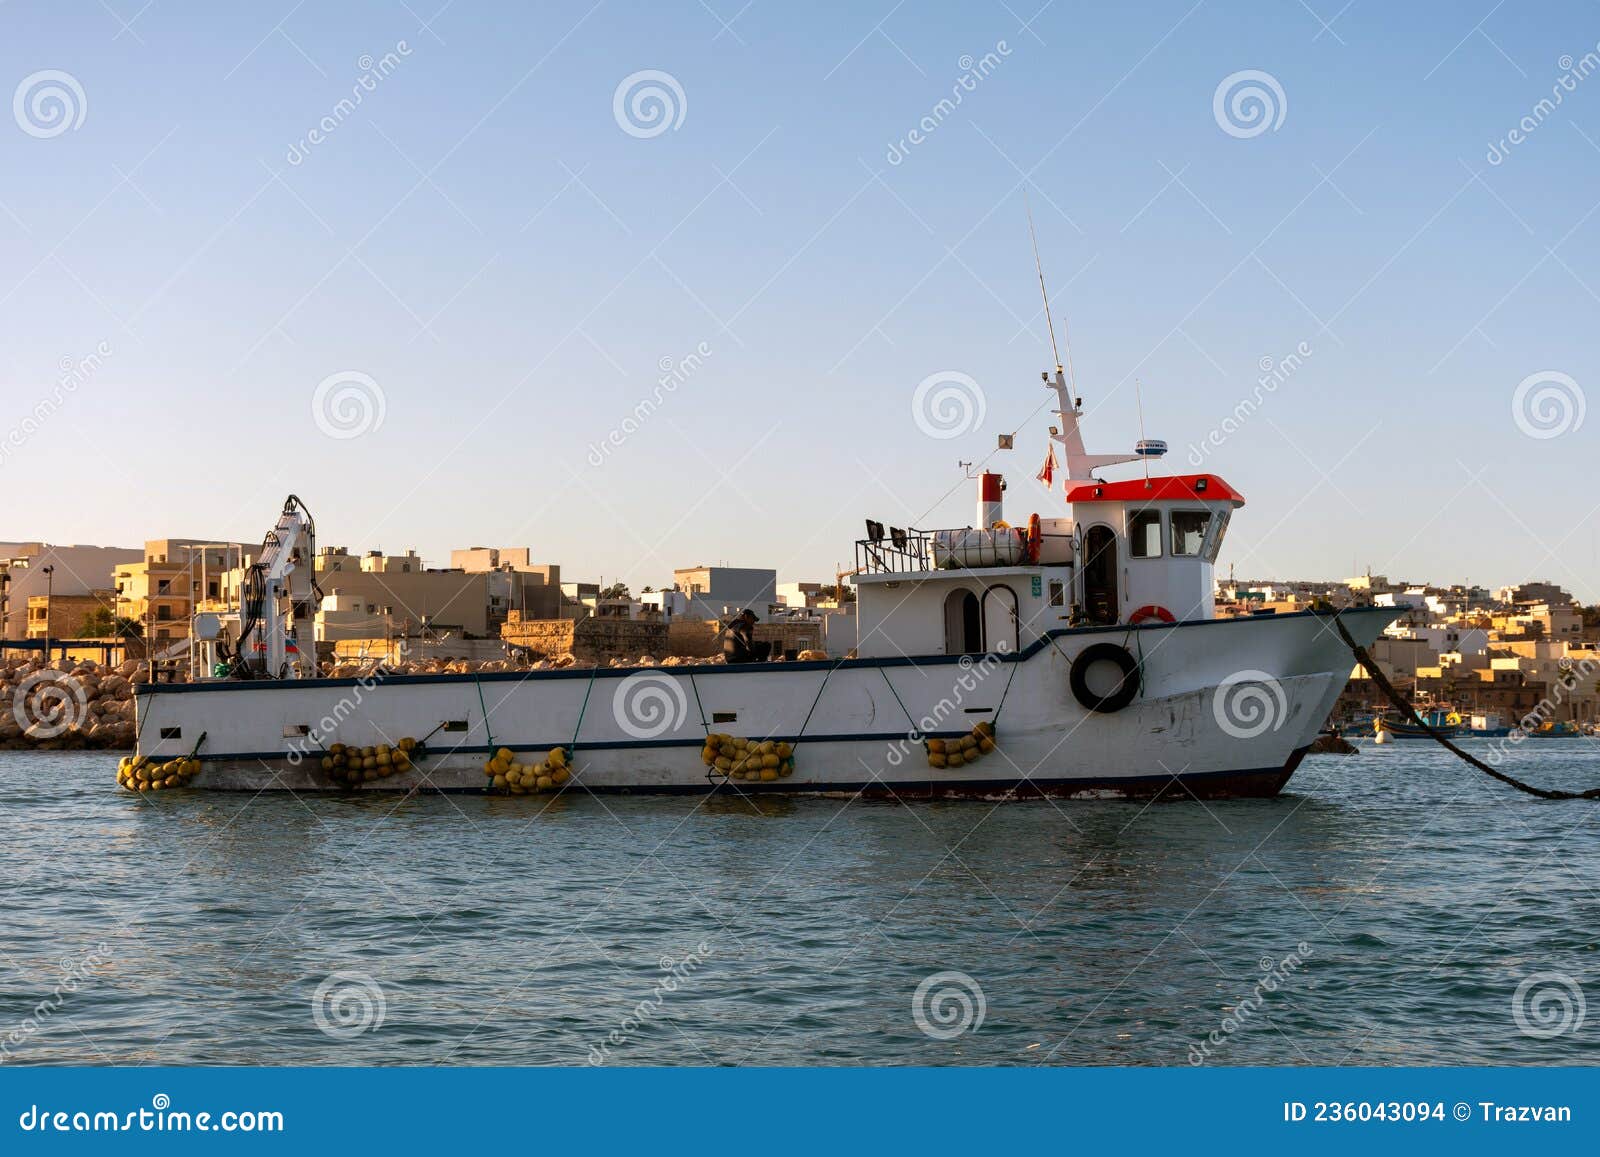 fishing vessel in harbor